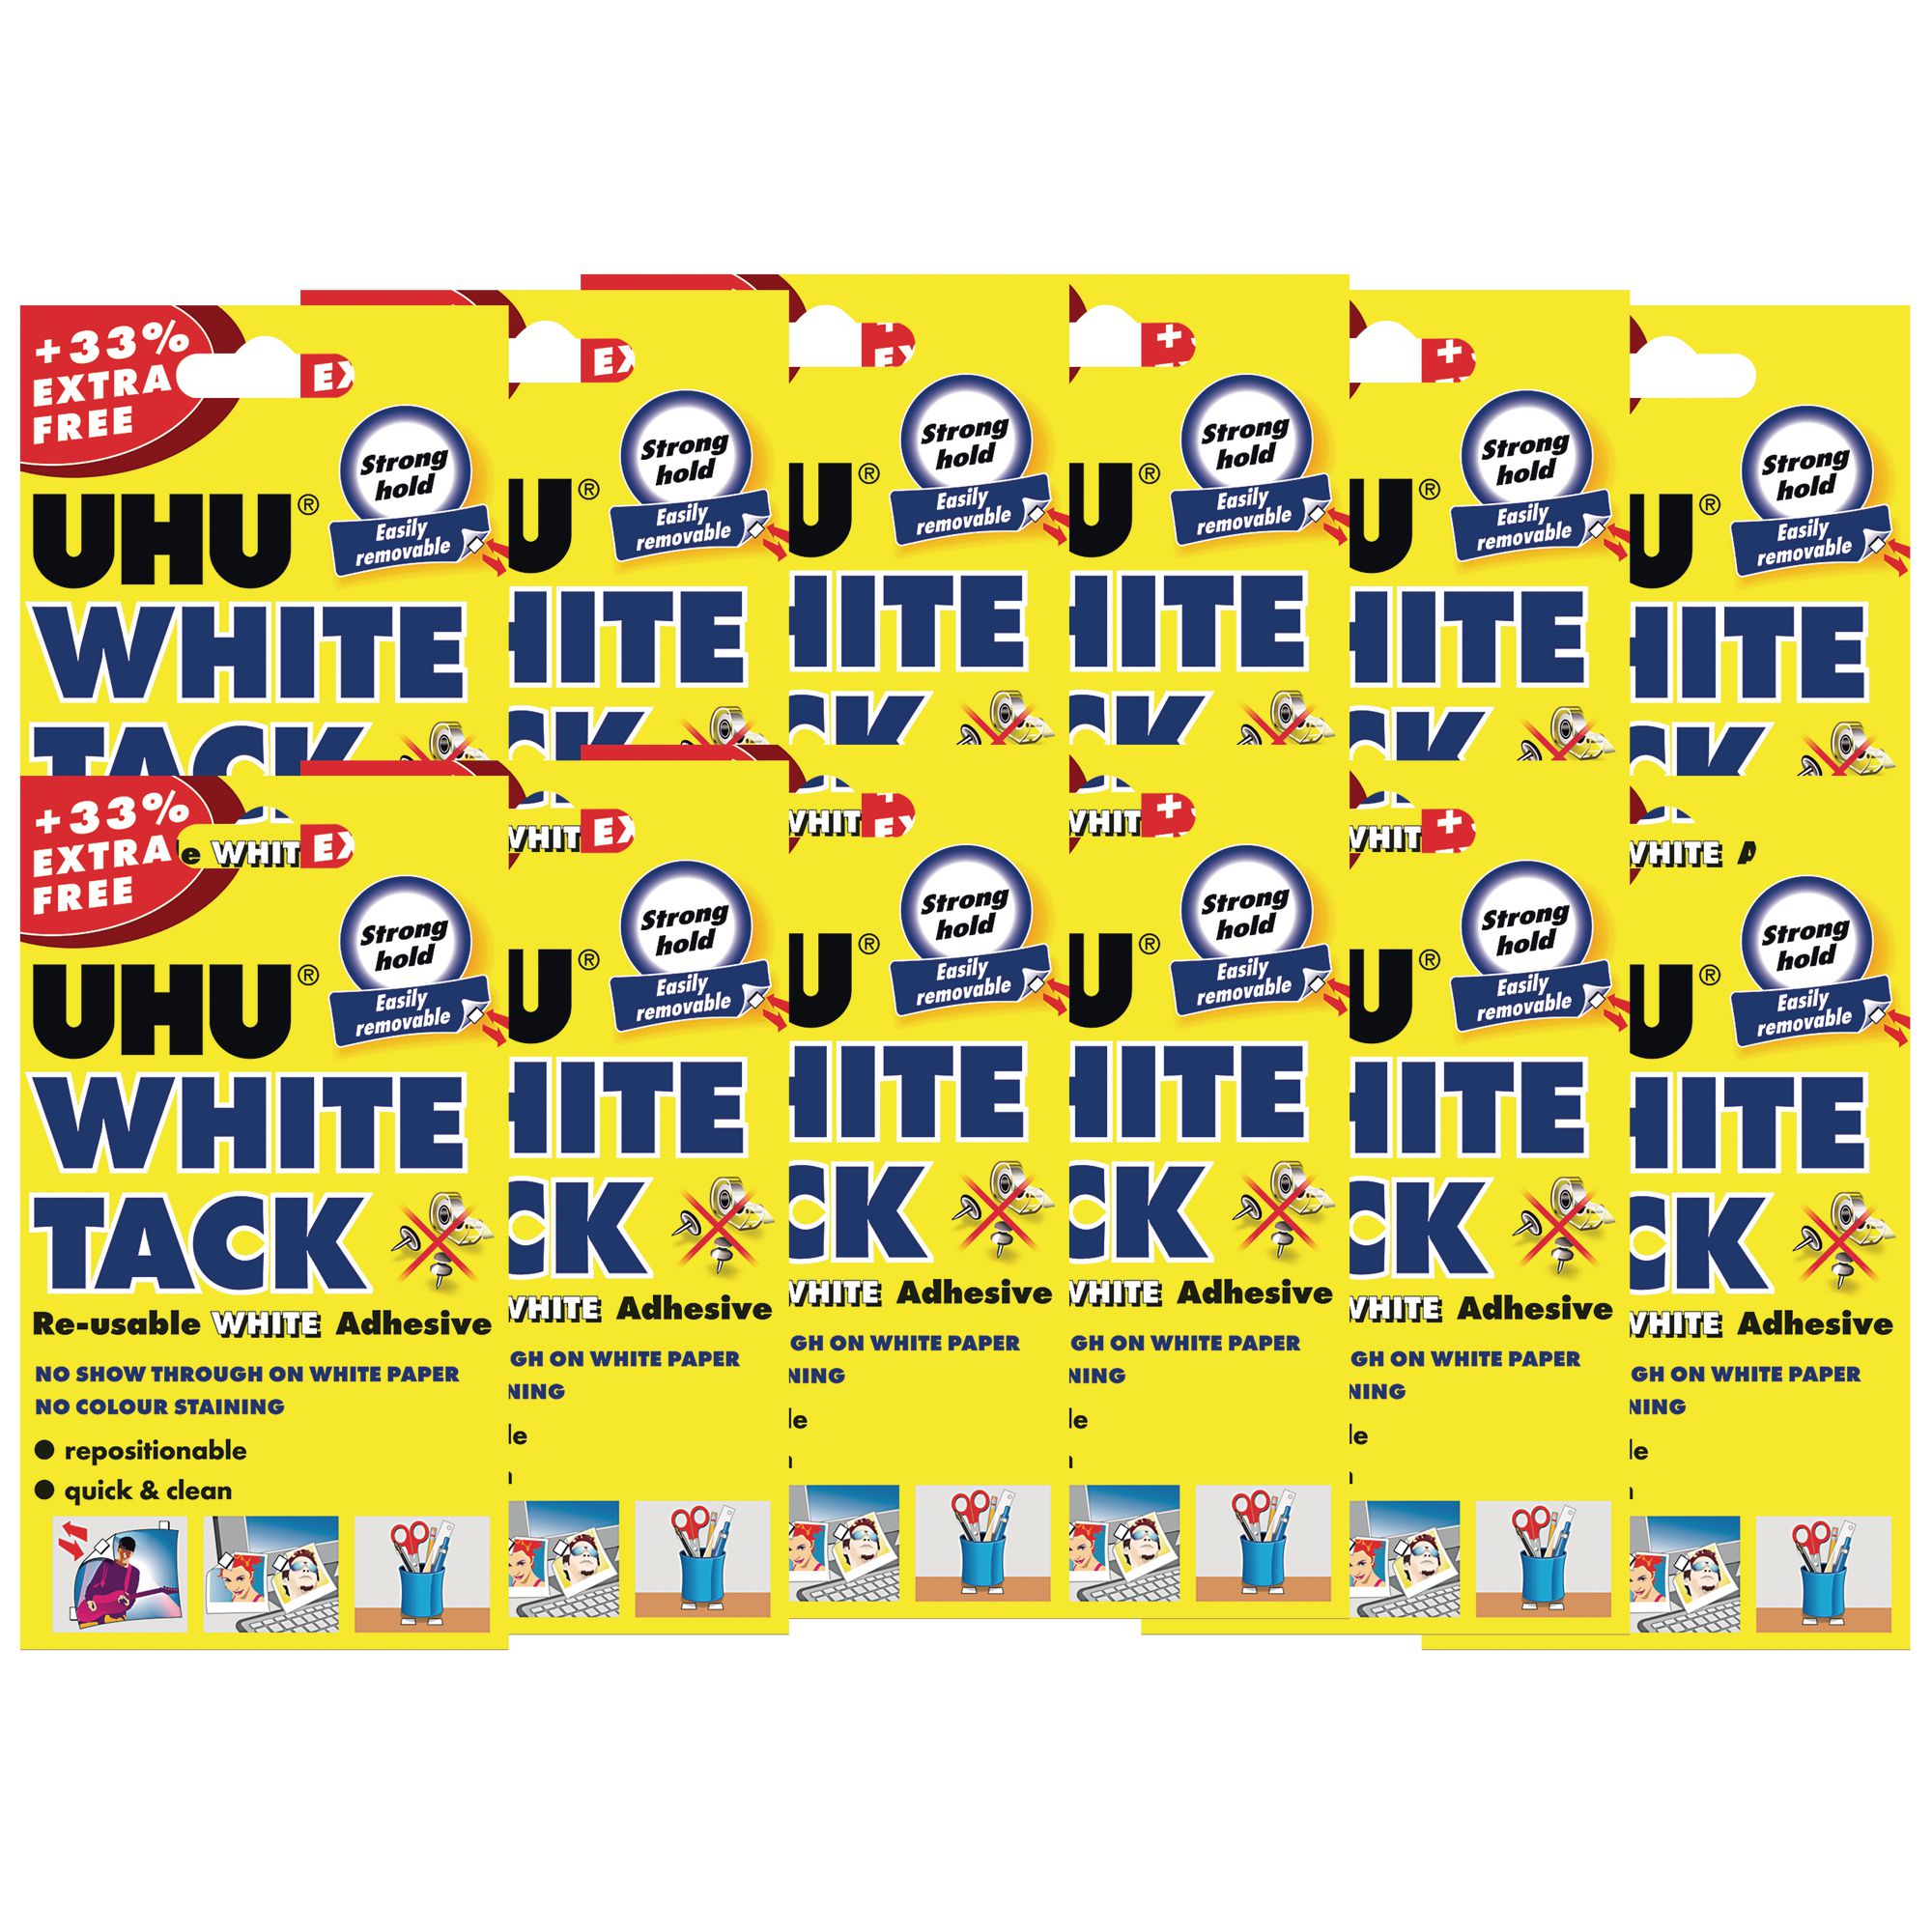 UHU White Tack 86.5g P12